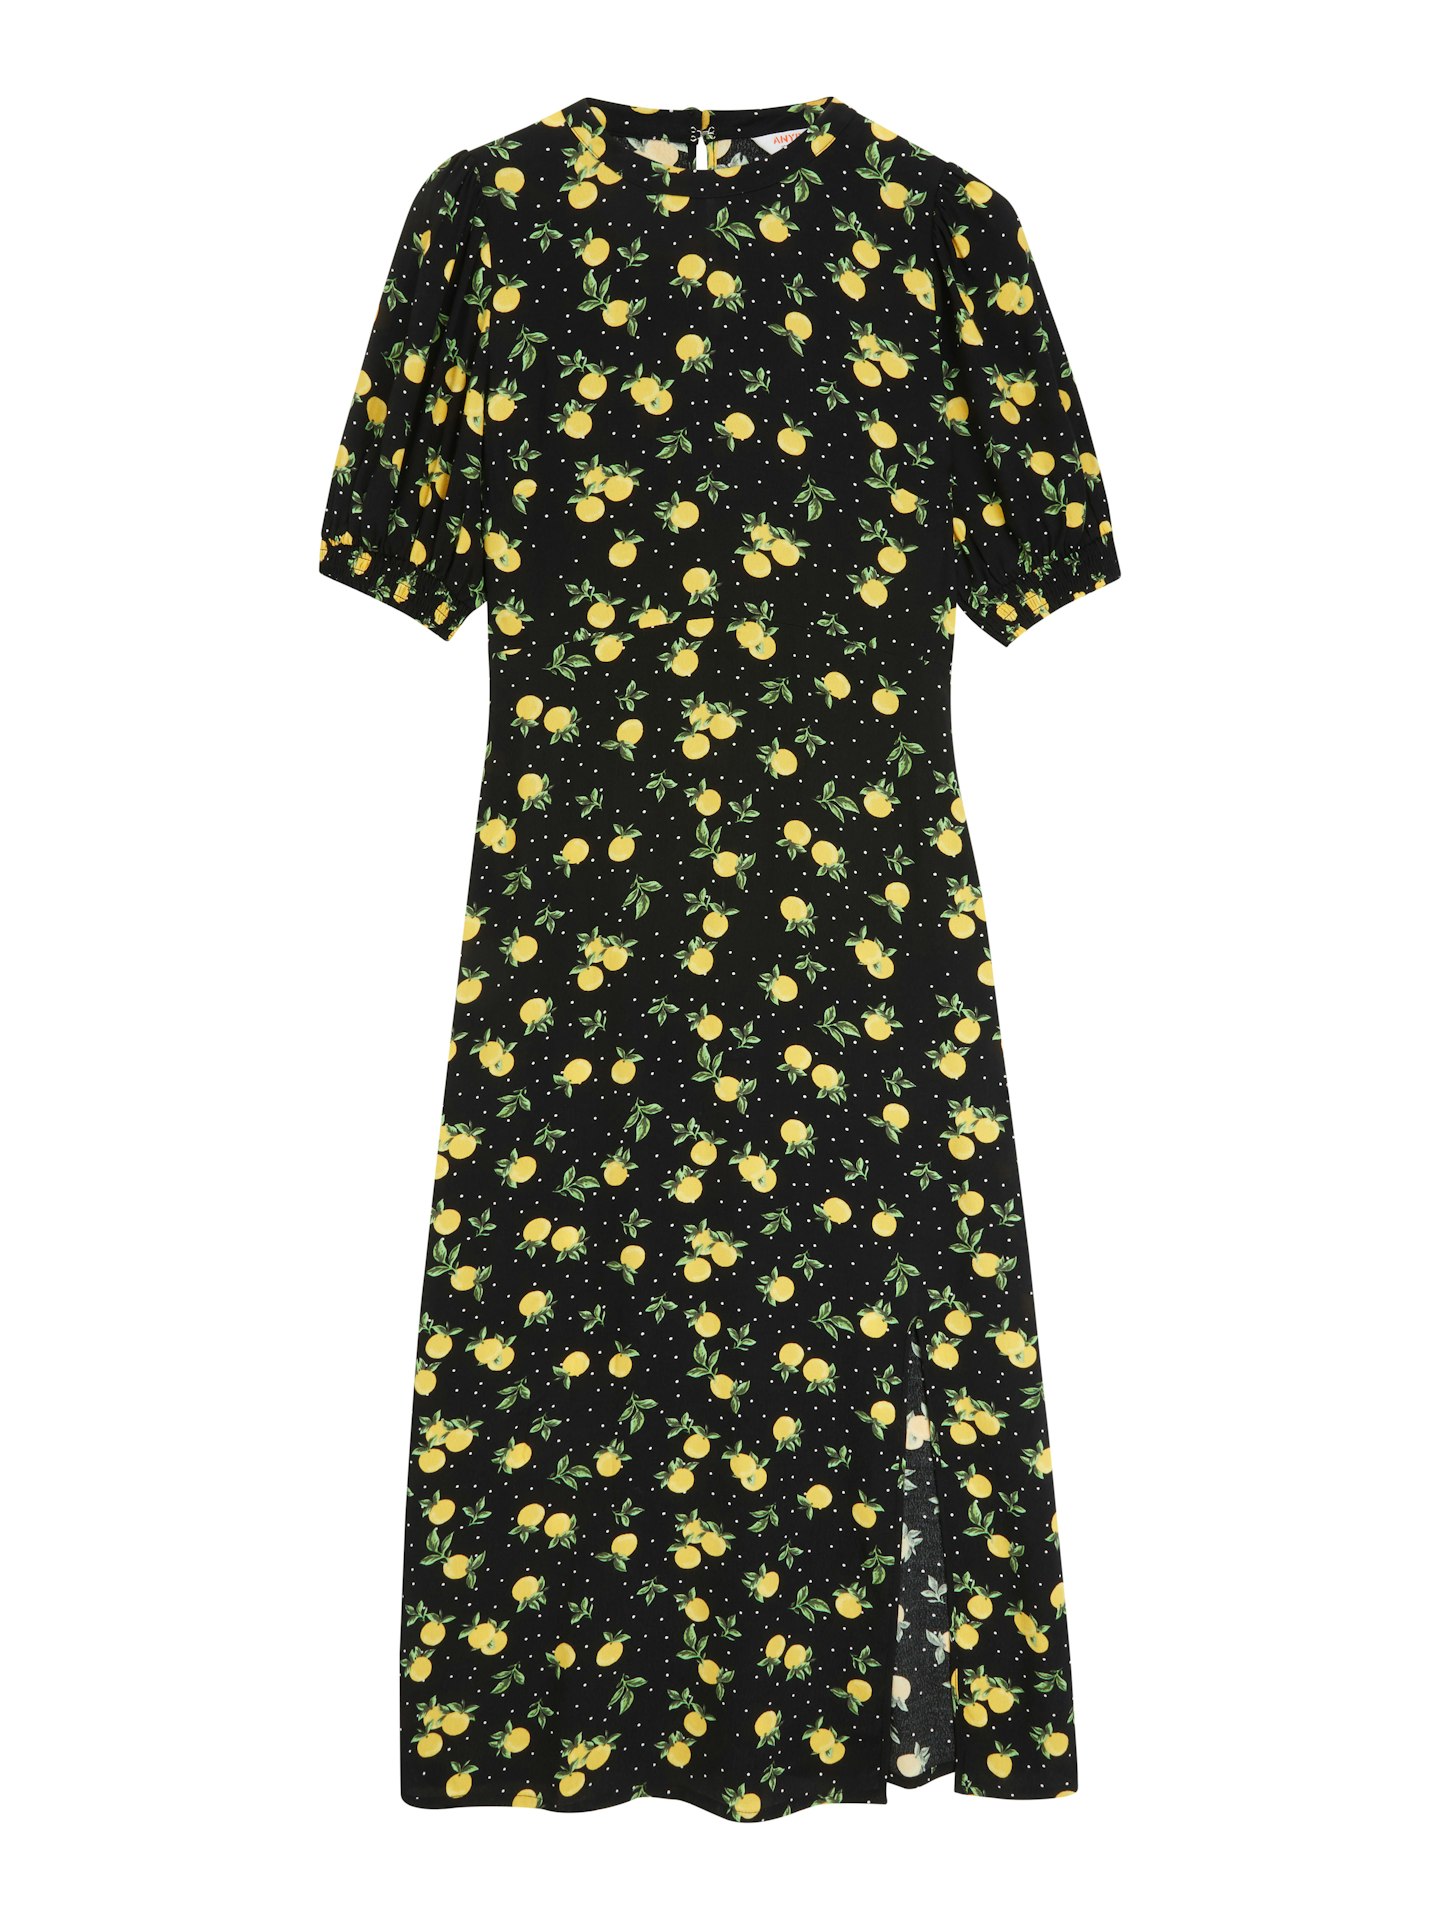 ANYDAY, Lemon Midi Dress, £42